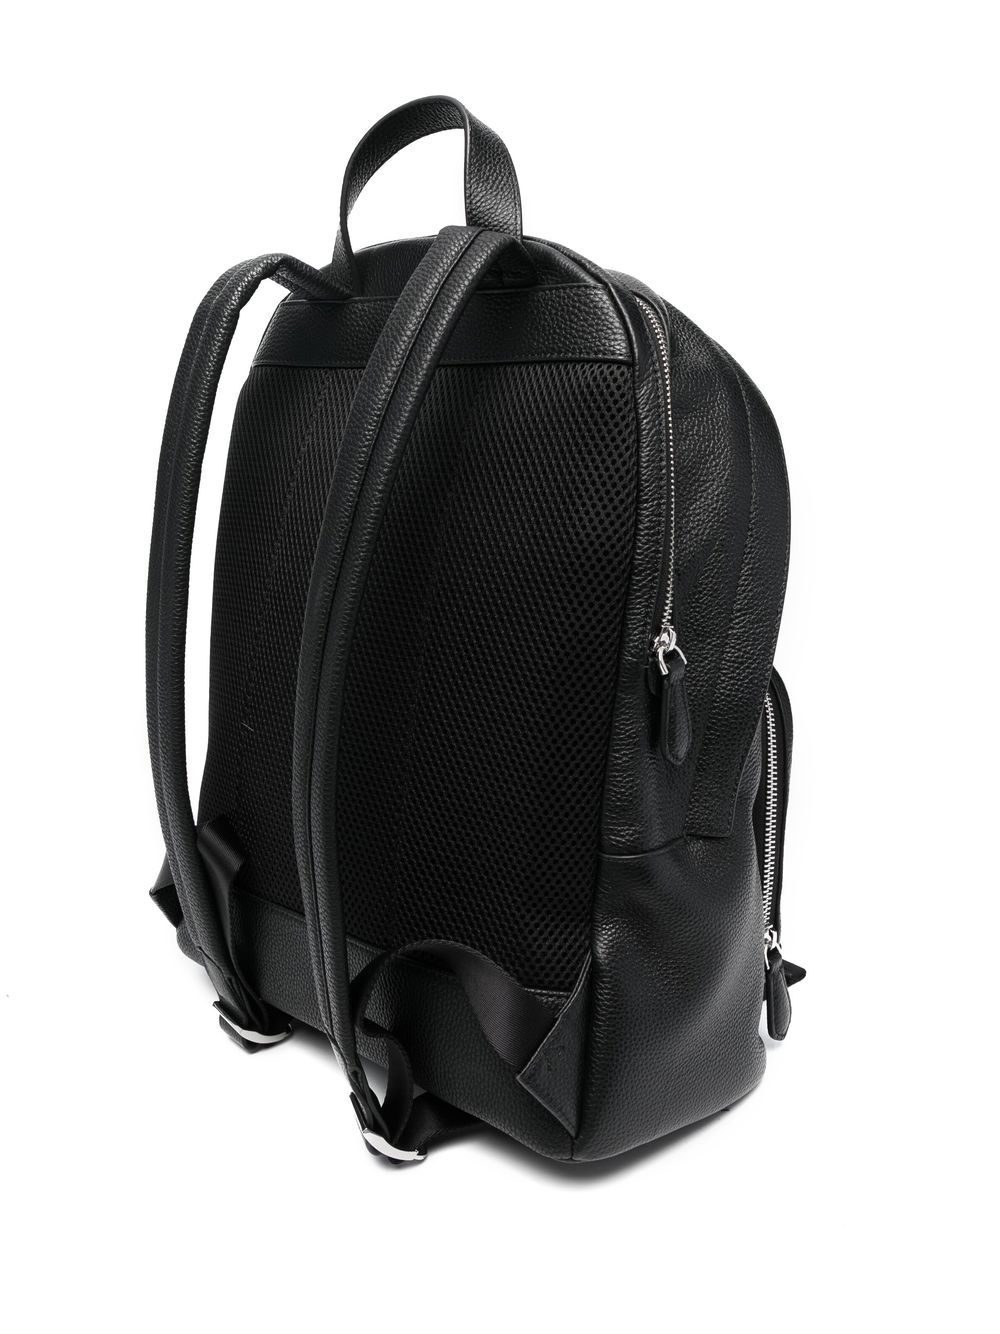 K/Ikonik 2.0 leather backpack